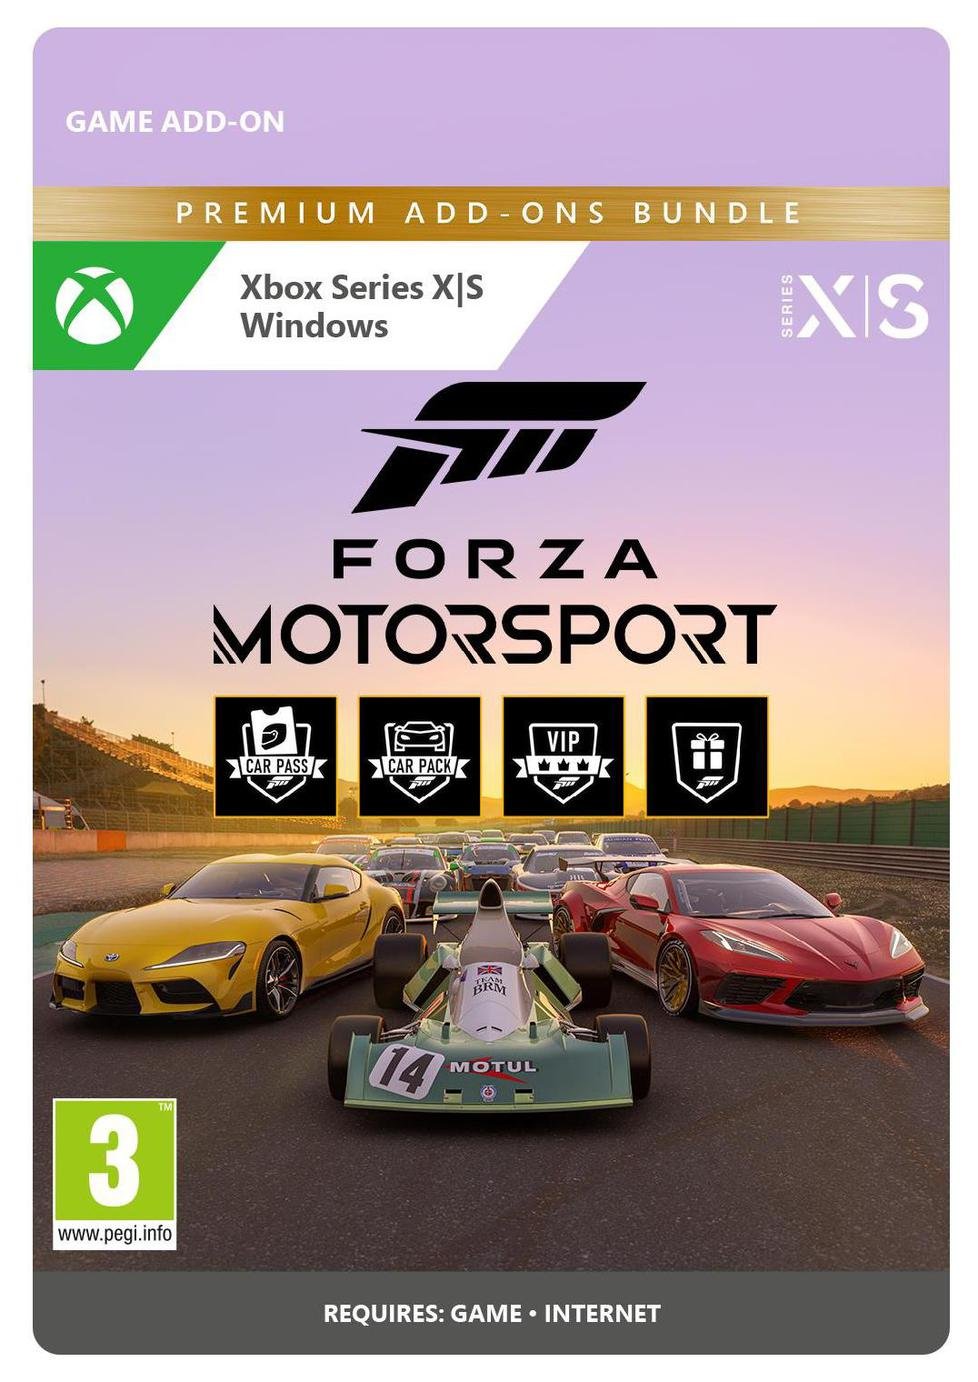 Microsoft Forza Motorsport Premium Game Add-Ons Bundle - Xbox & PC